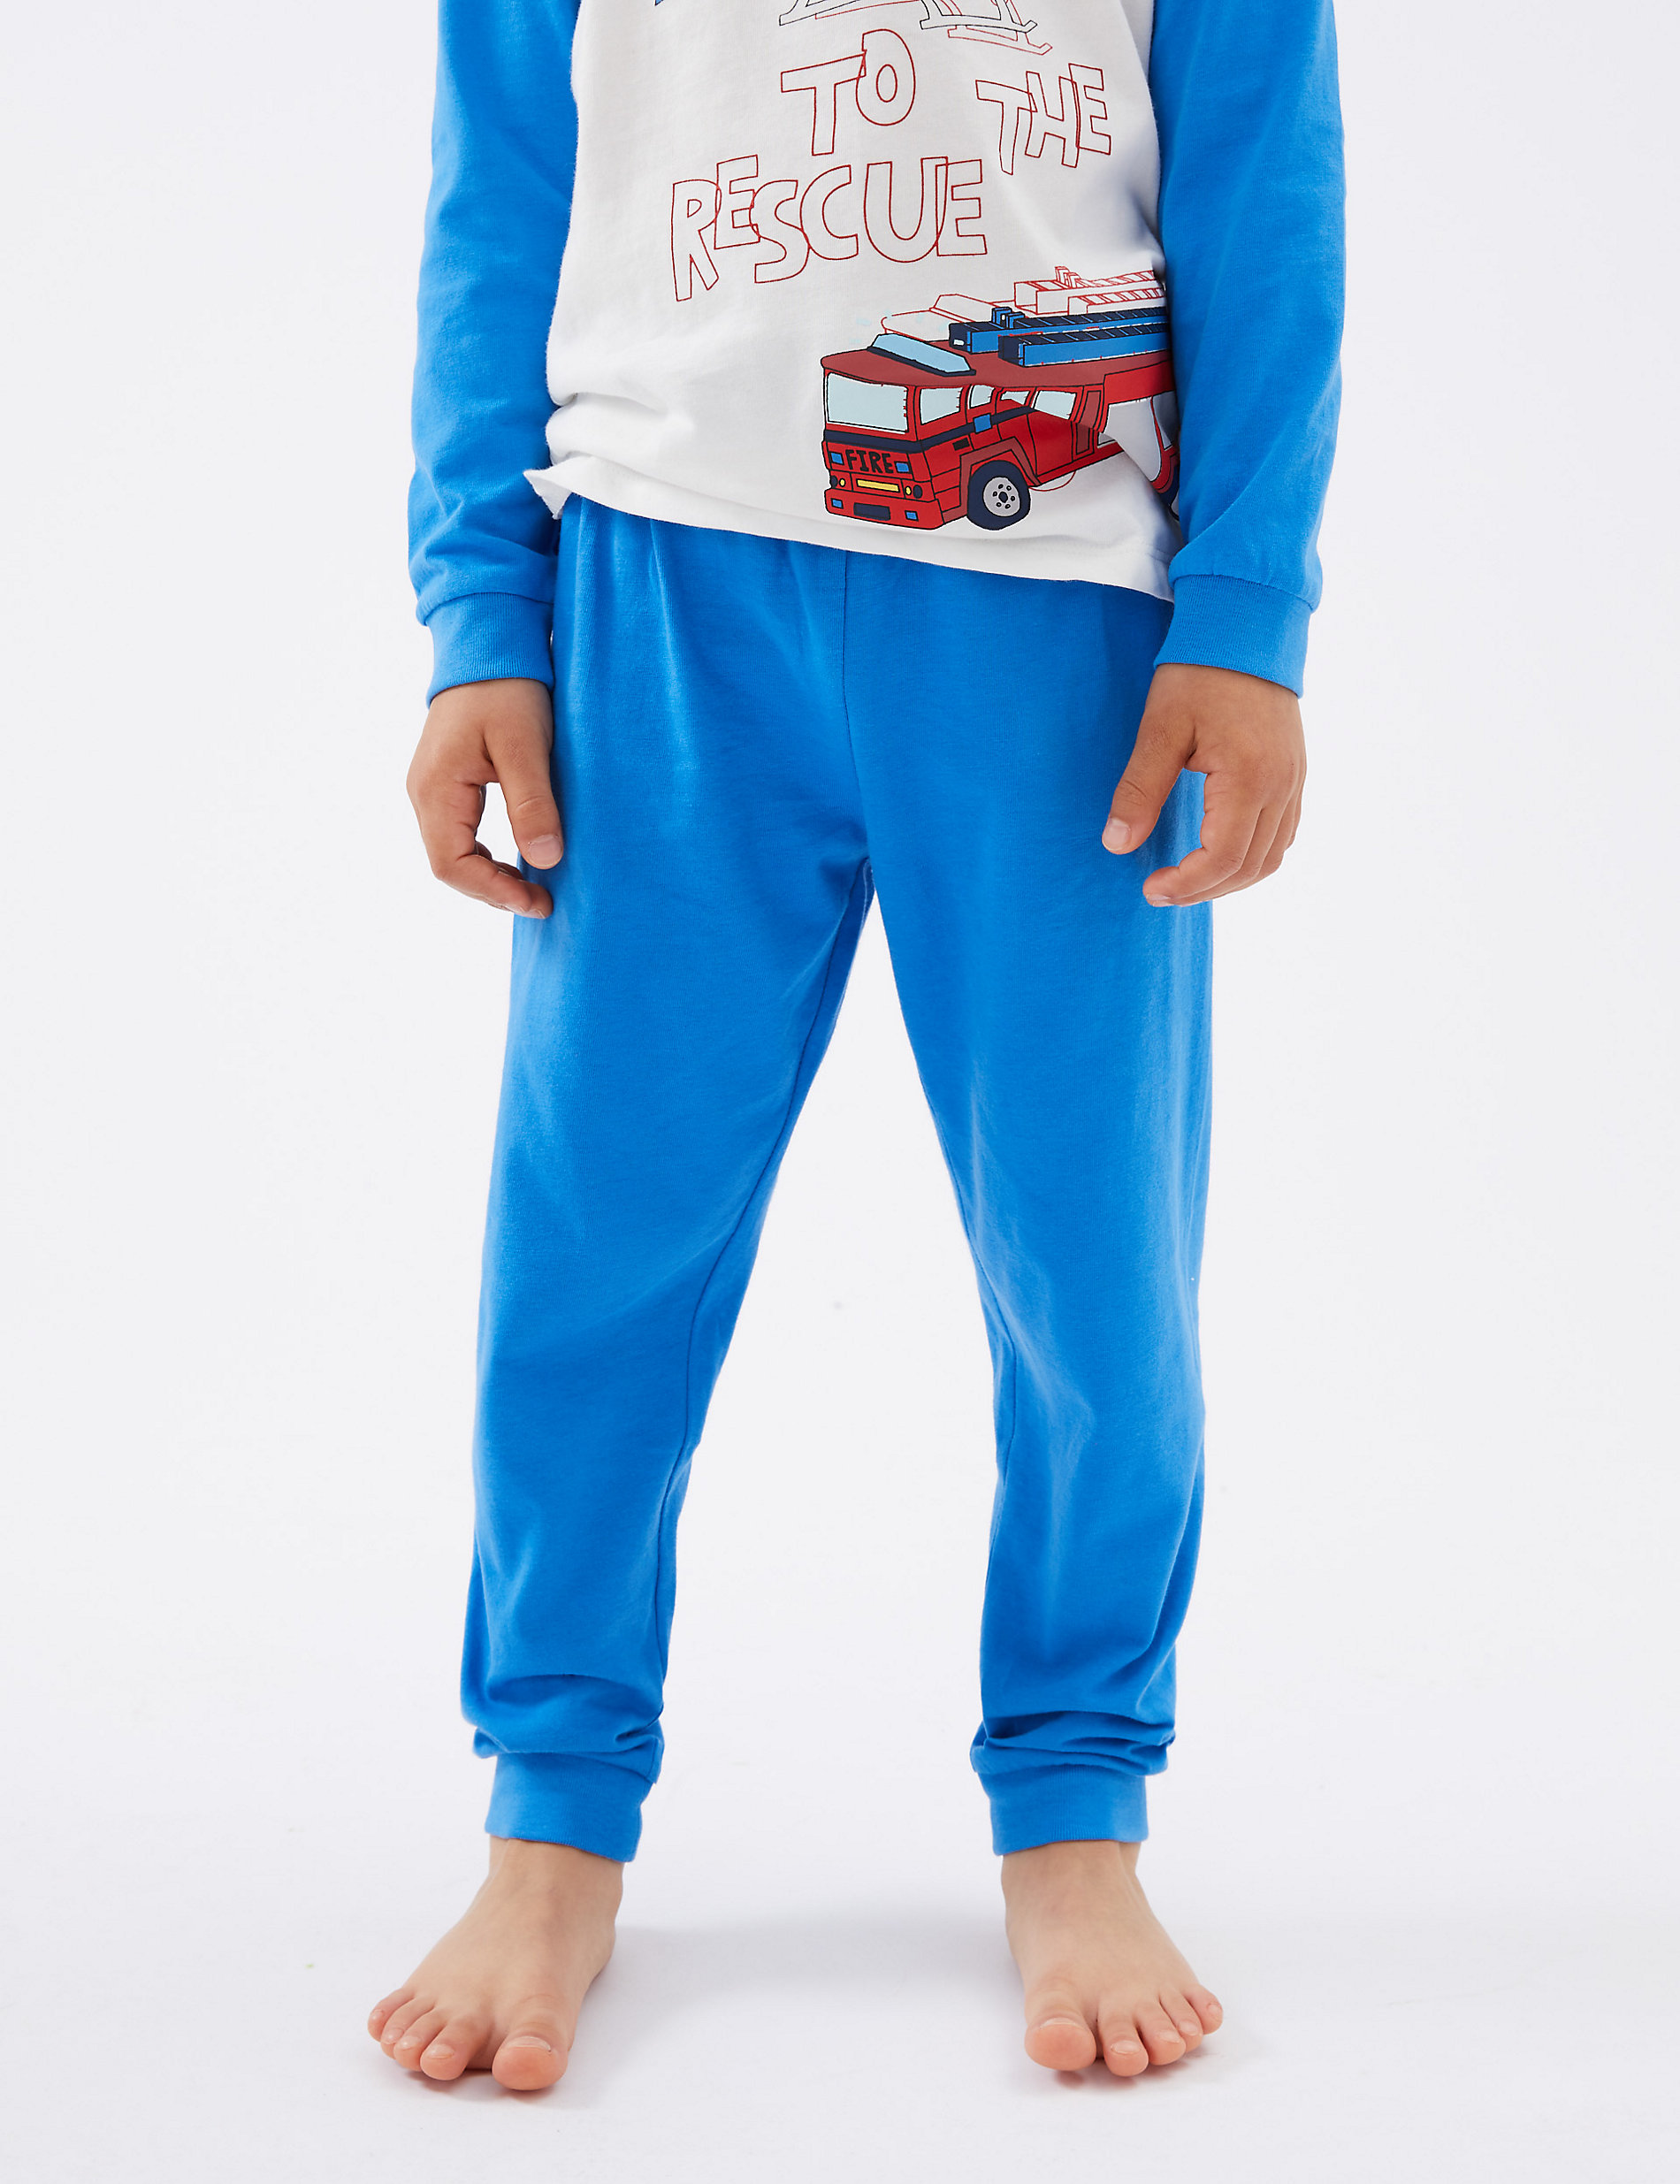 2pk Pure Cotton Transport Pyjama Sets (1-7 Yrs)